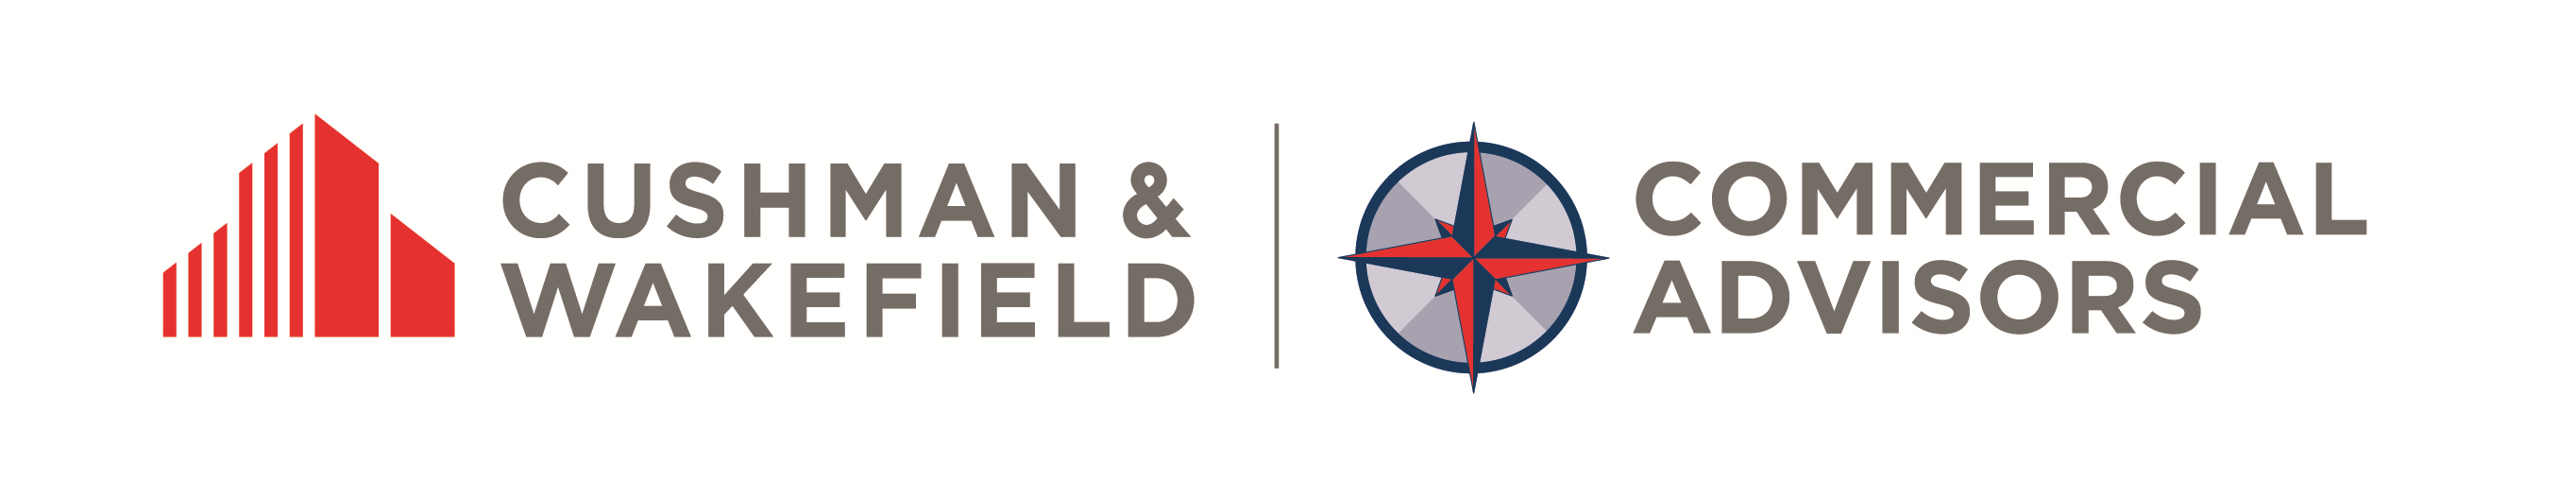 Cushman & Wakefield | Commercial Advisors logo